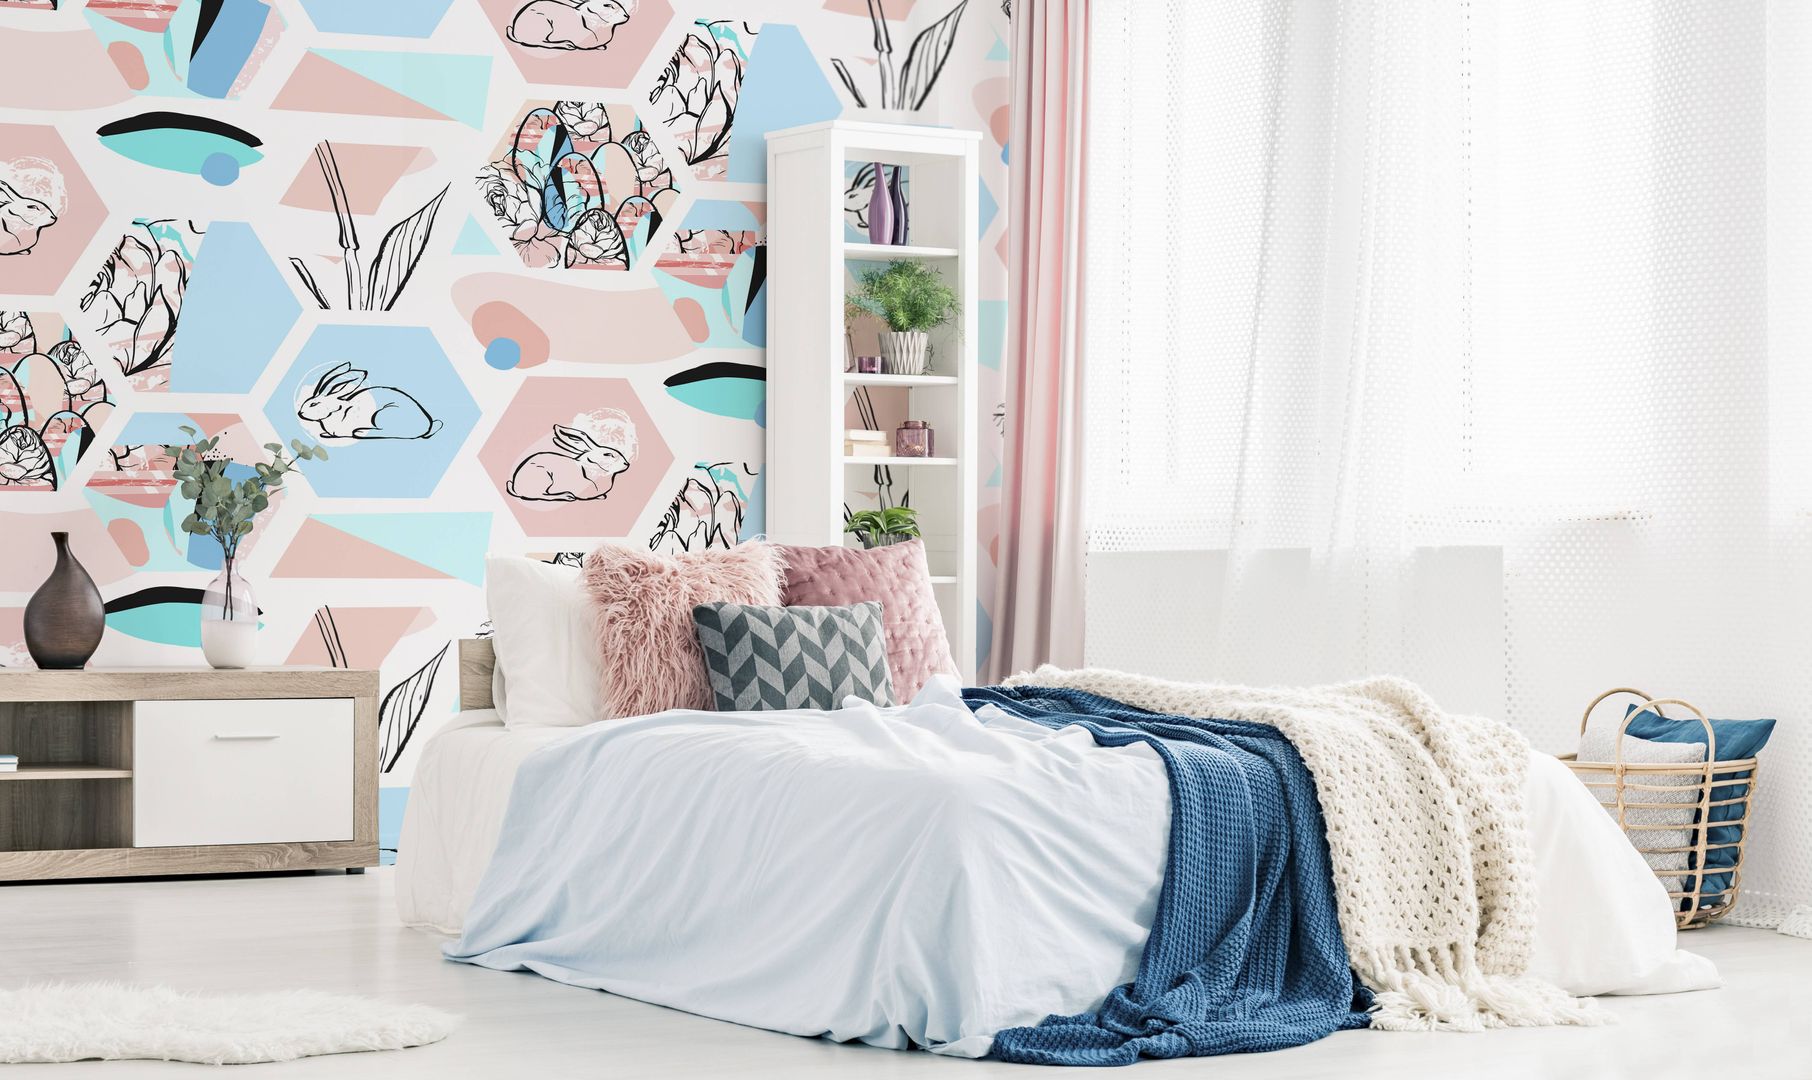 PASTEL EASTER Pixers Camera da letto in stile scandinavo easter,bedroom,pastel colors